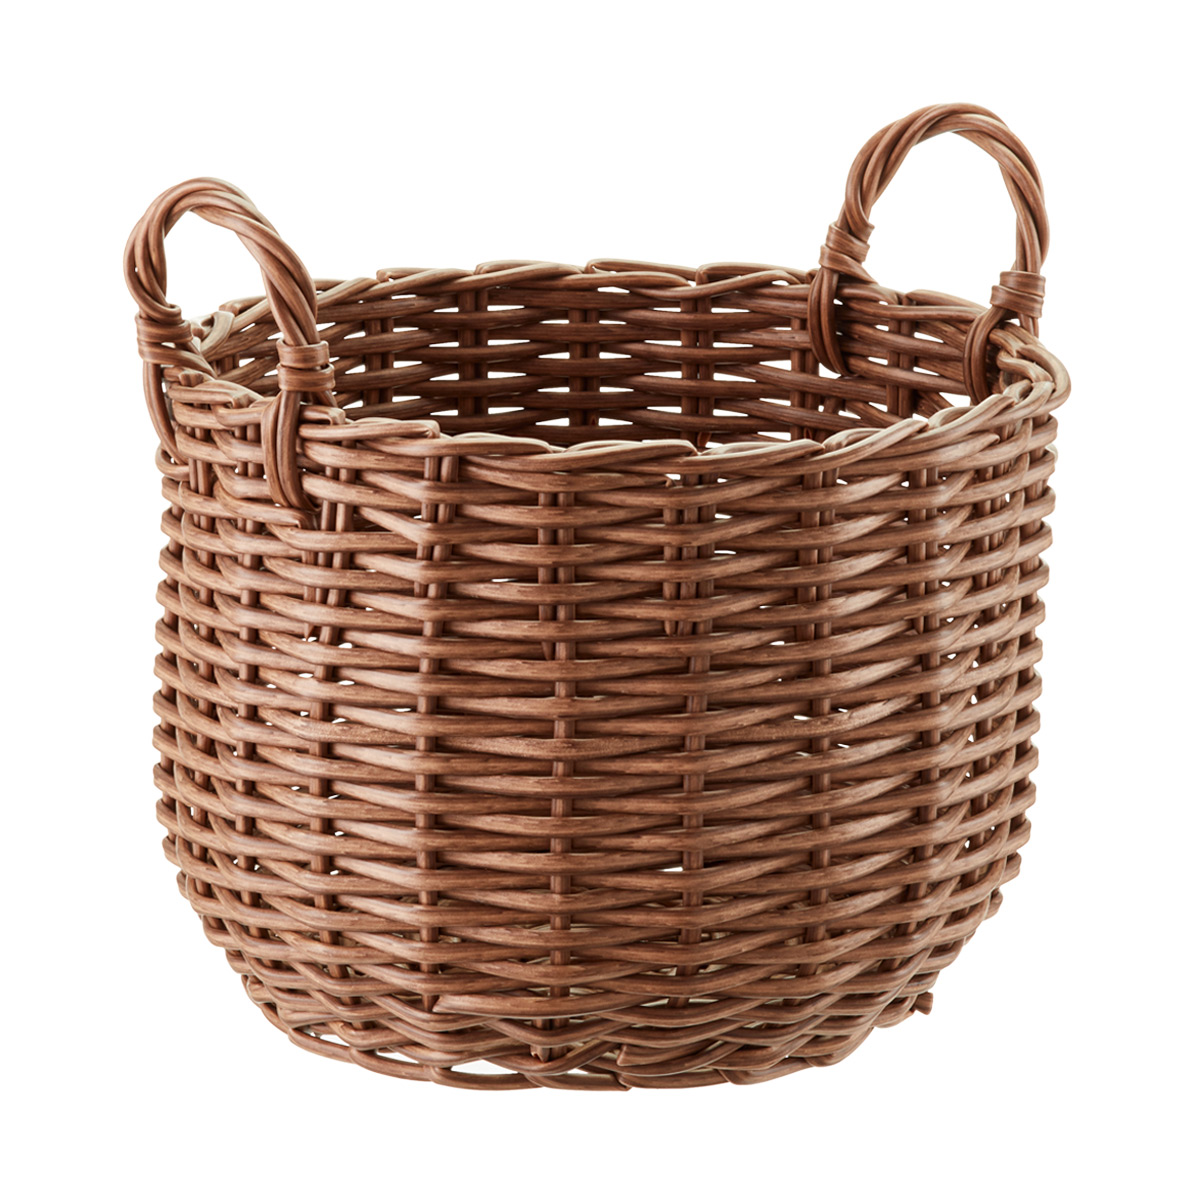 wicker baskets round plastic wicker storage bin with handles ZTSROXJ